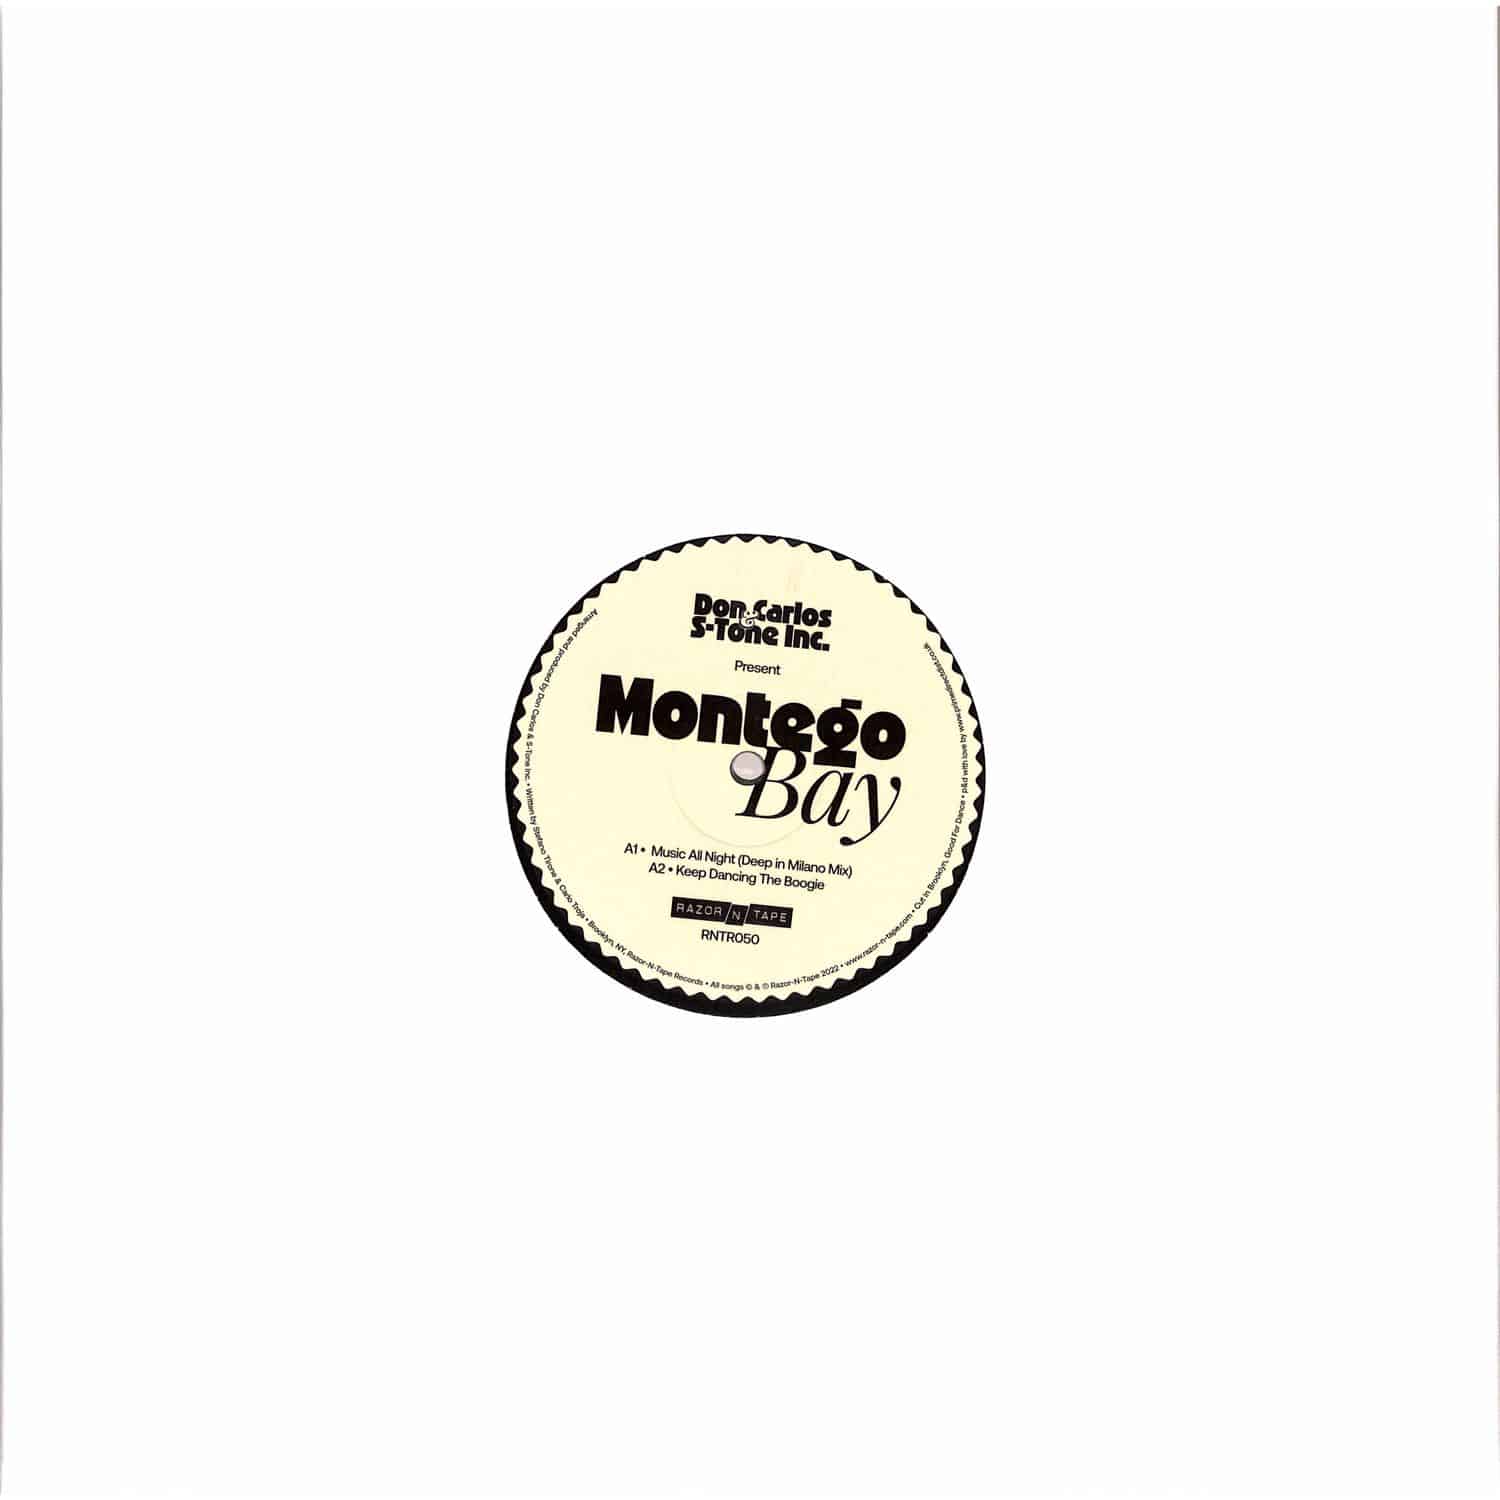 Don Carlos & S-Tone Present: Montego Bay - DREAMING THE FUTURE EP